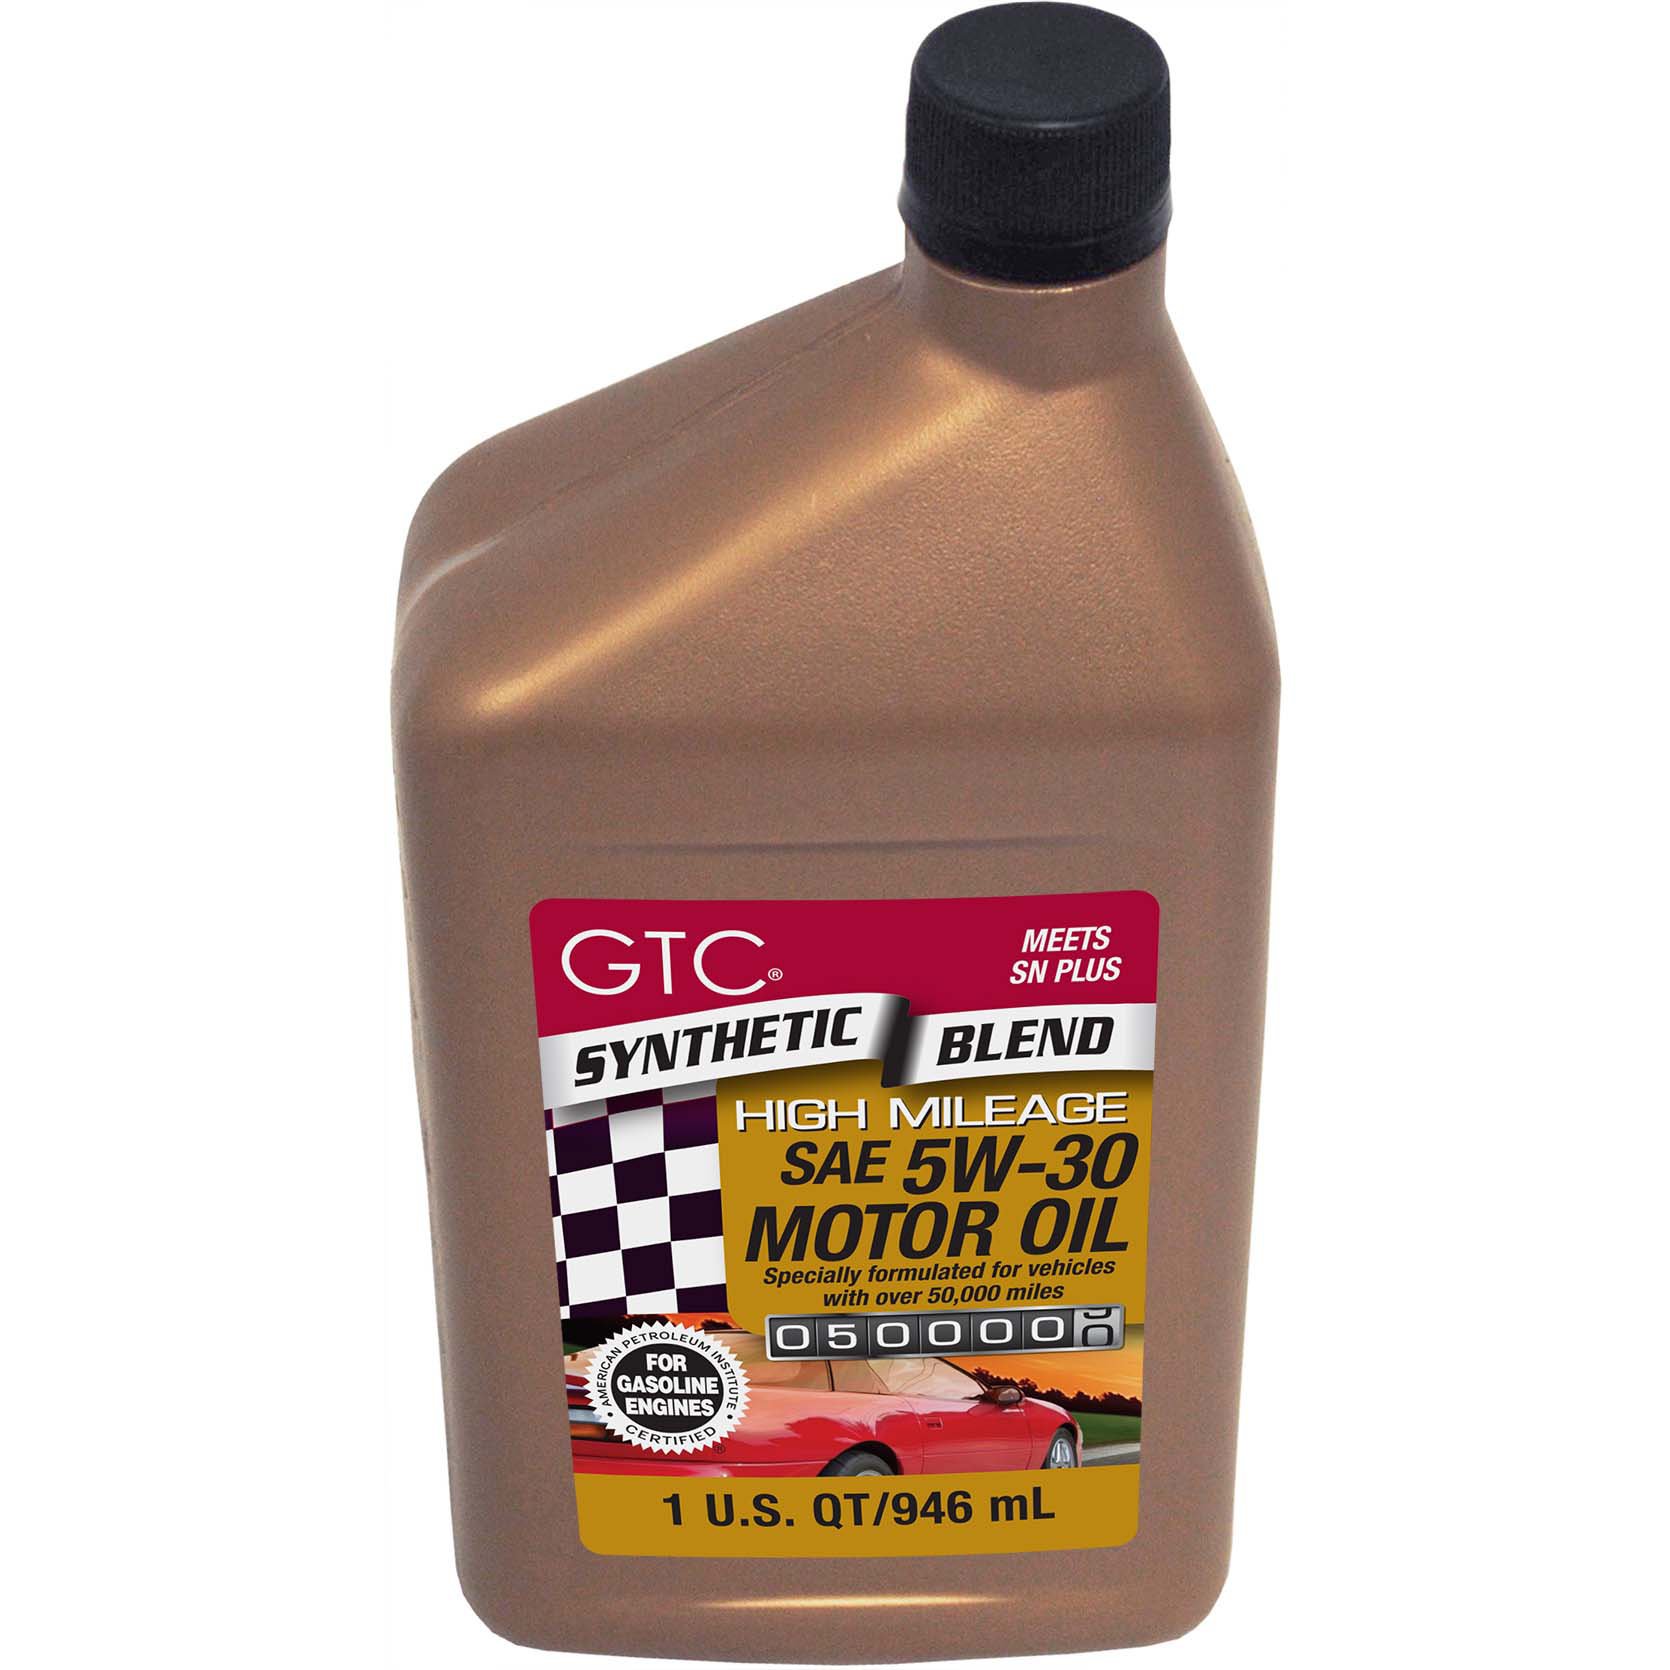 GTC Synthetic Blend High Mileage SAE 5W-30 Motor Oil Shop Motor Oil & Fluids